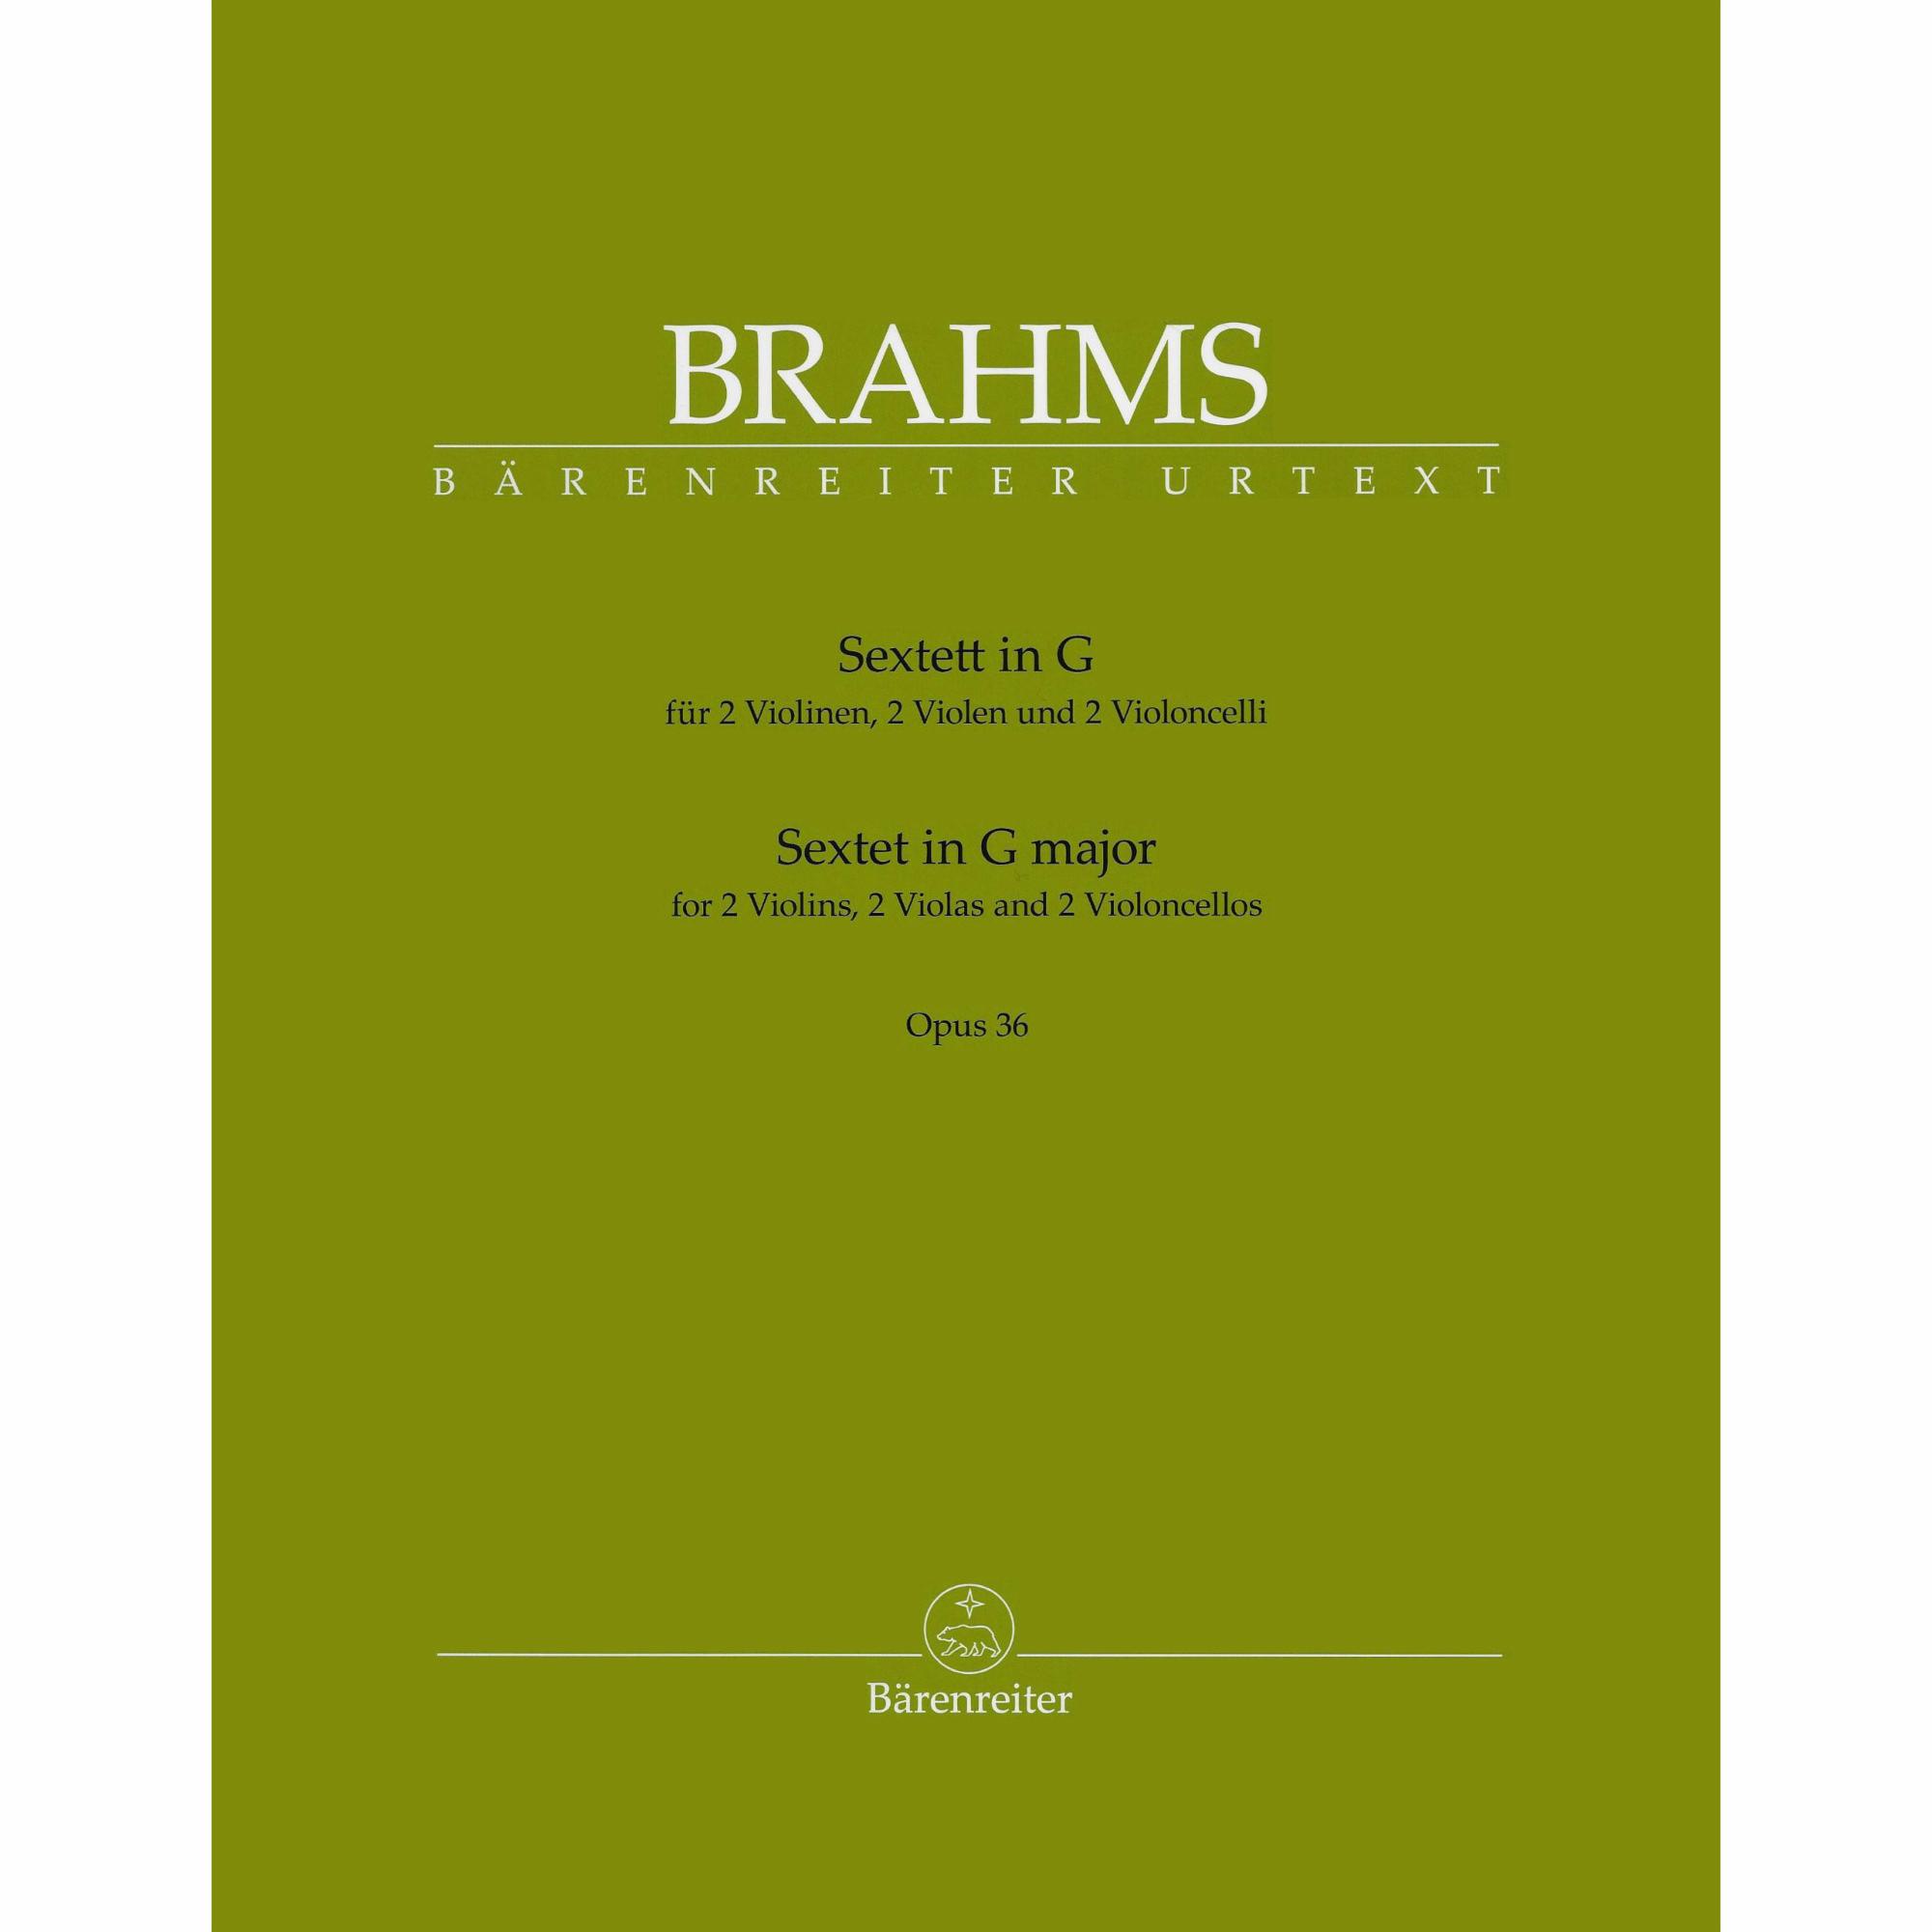 Brahms -- String Sextet No. 2 in G Major, Op. 36